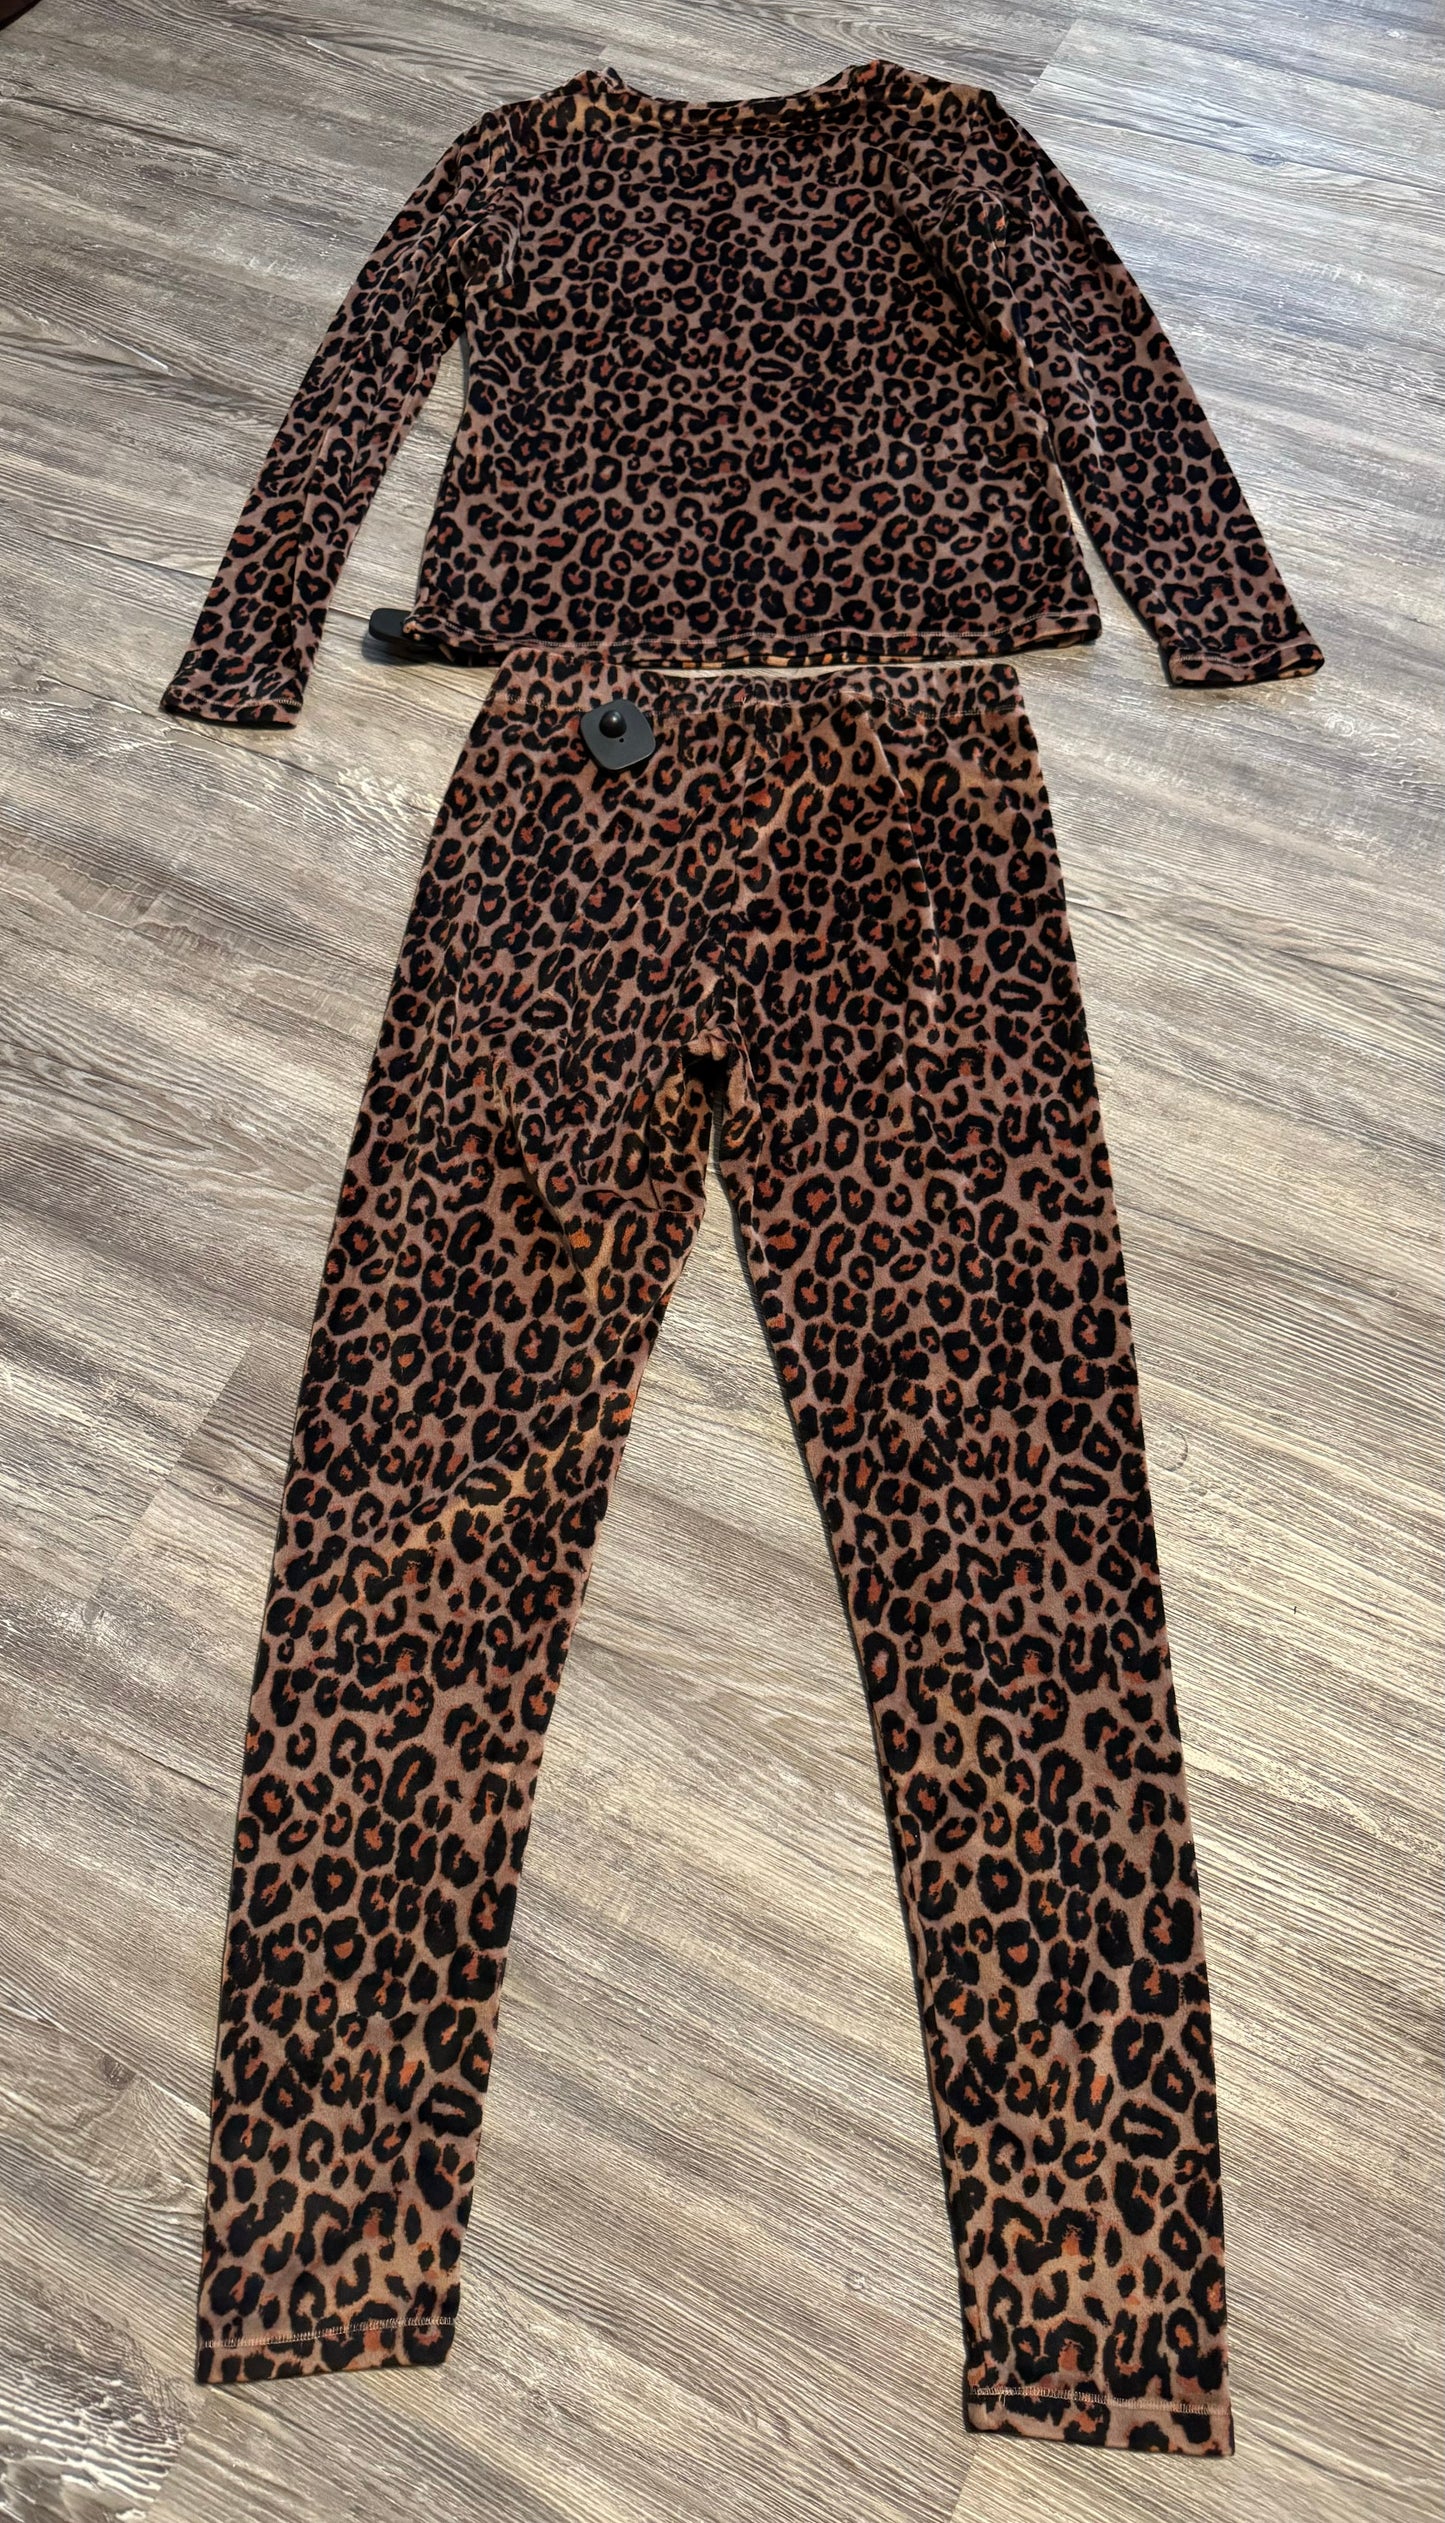 Pajamas 2pc By Cuddl Duds  Size: S